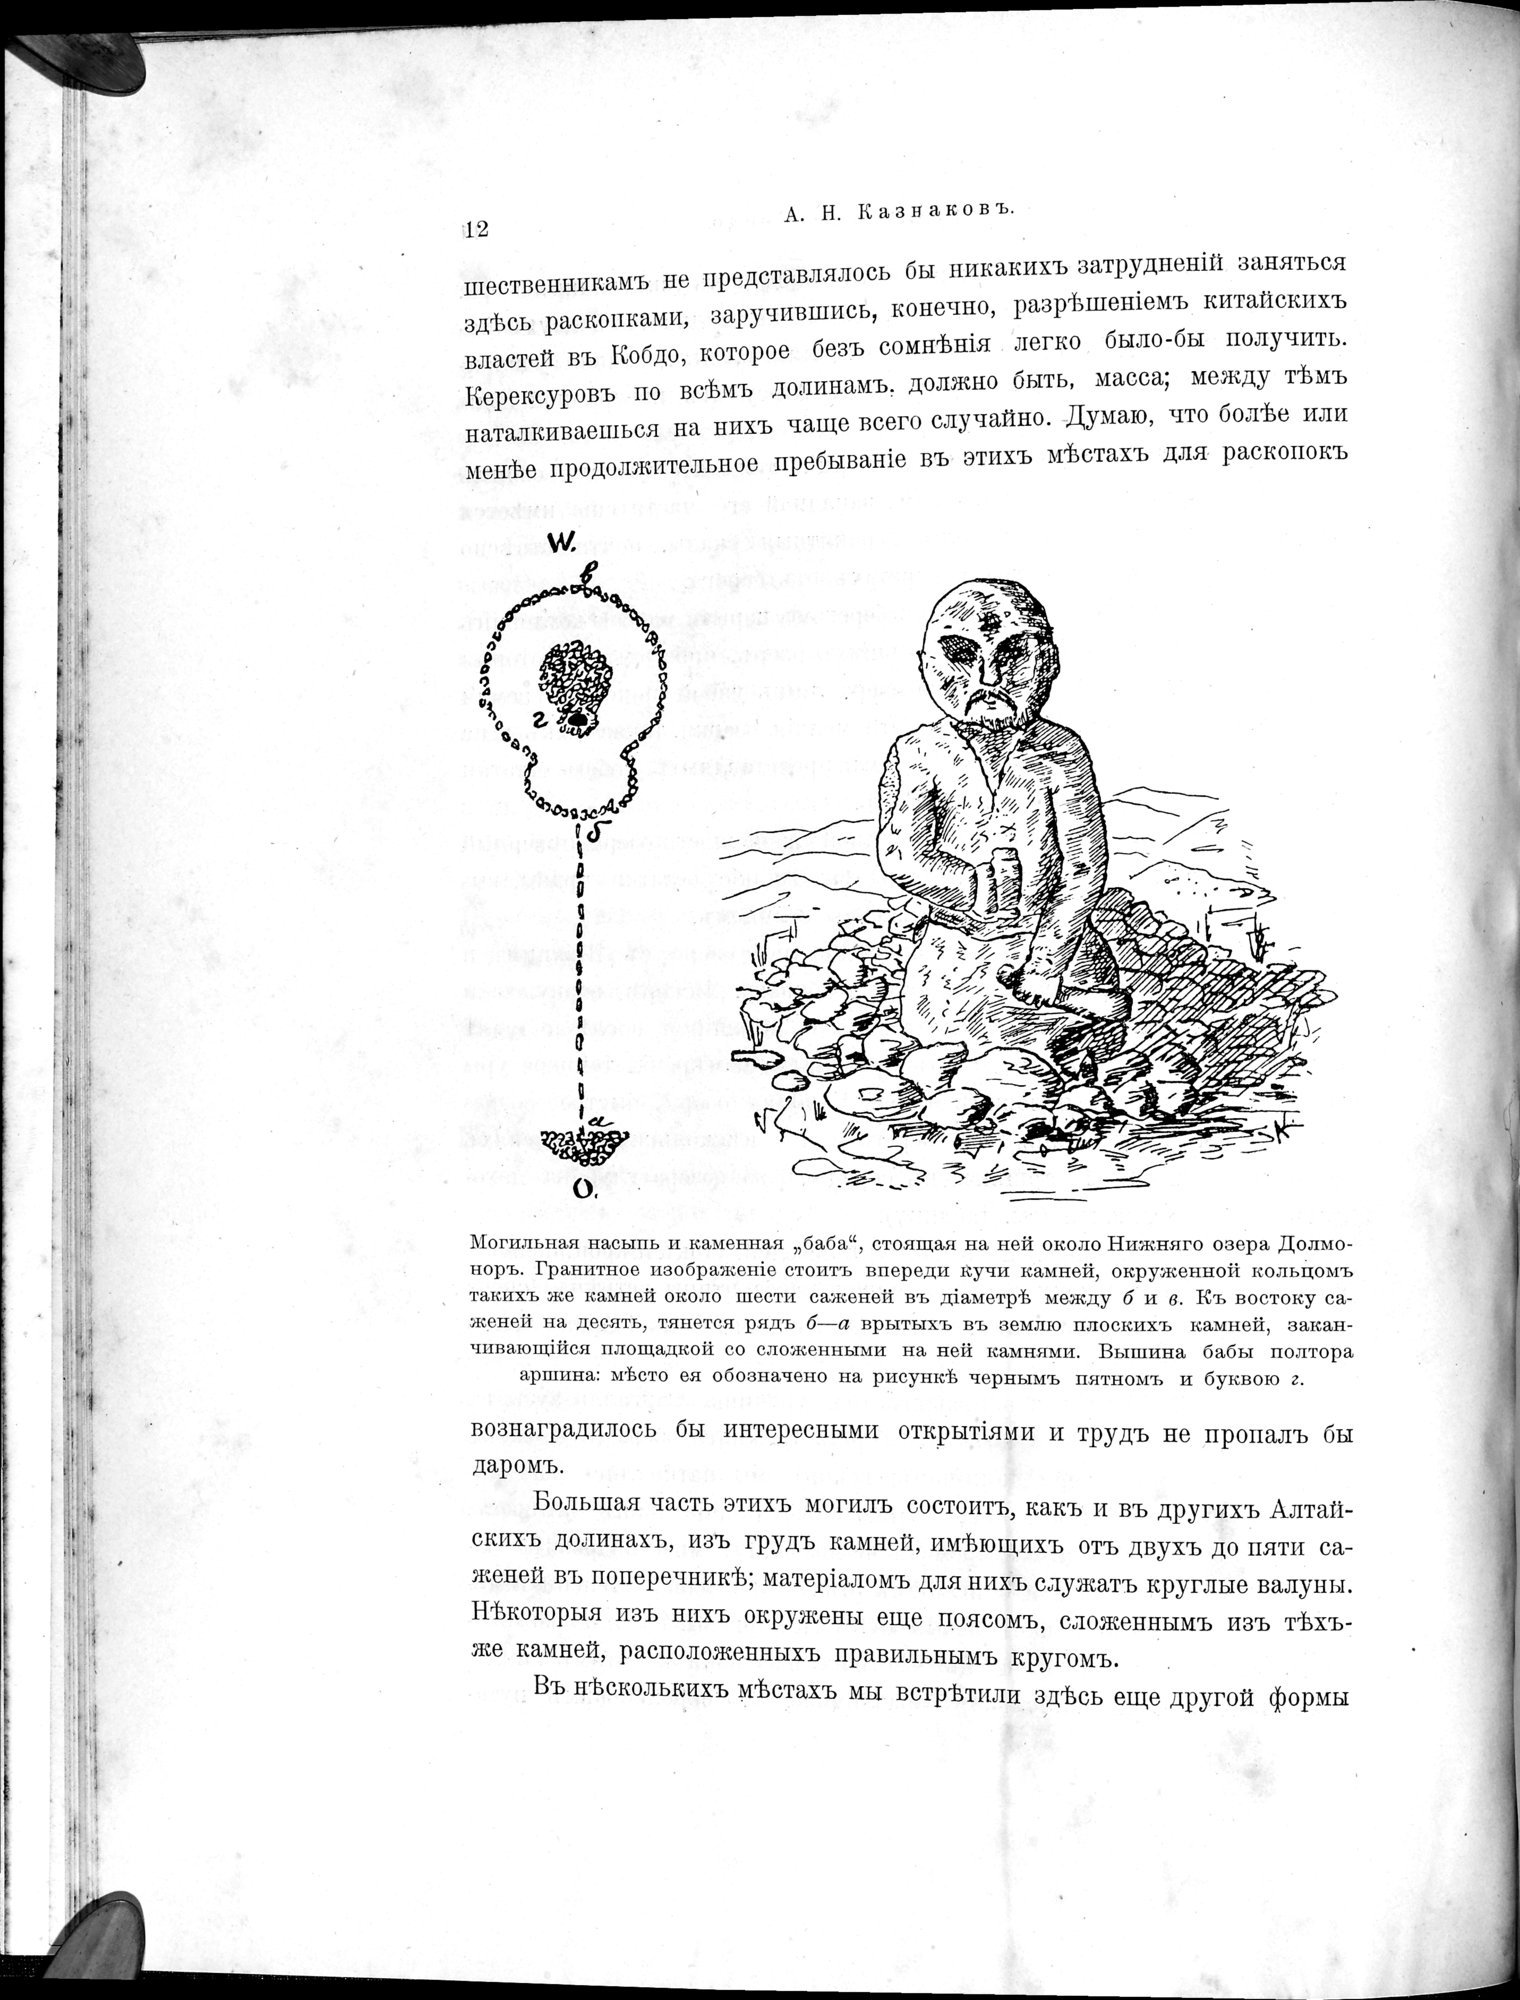 Mongoliia i Kam : vol.3 / Page 34 (Grayscale High Resolution Image)